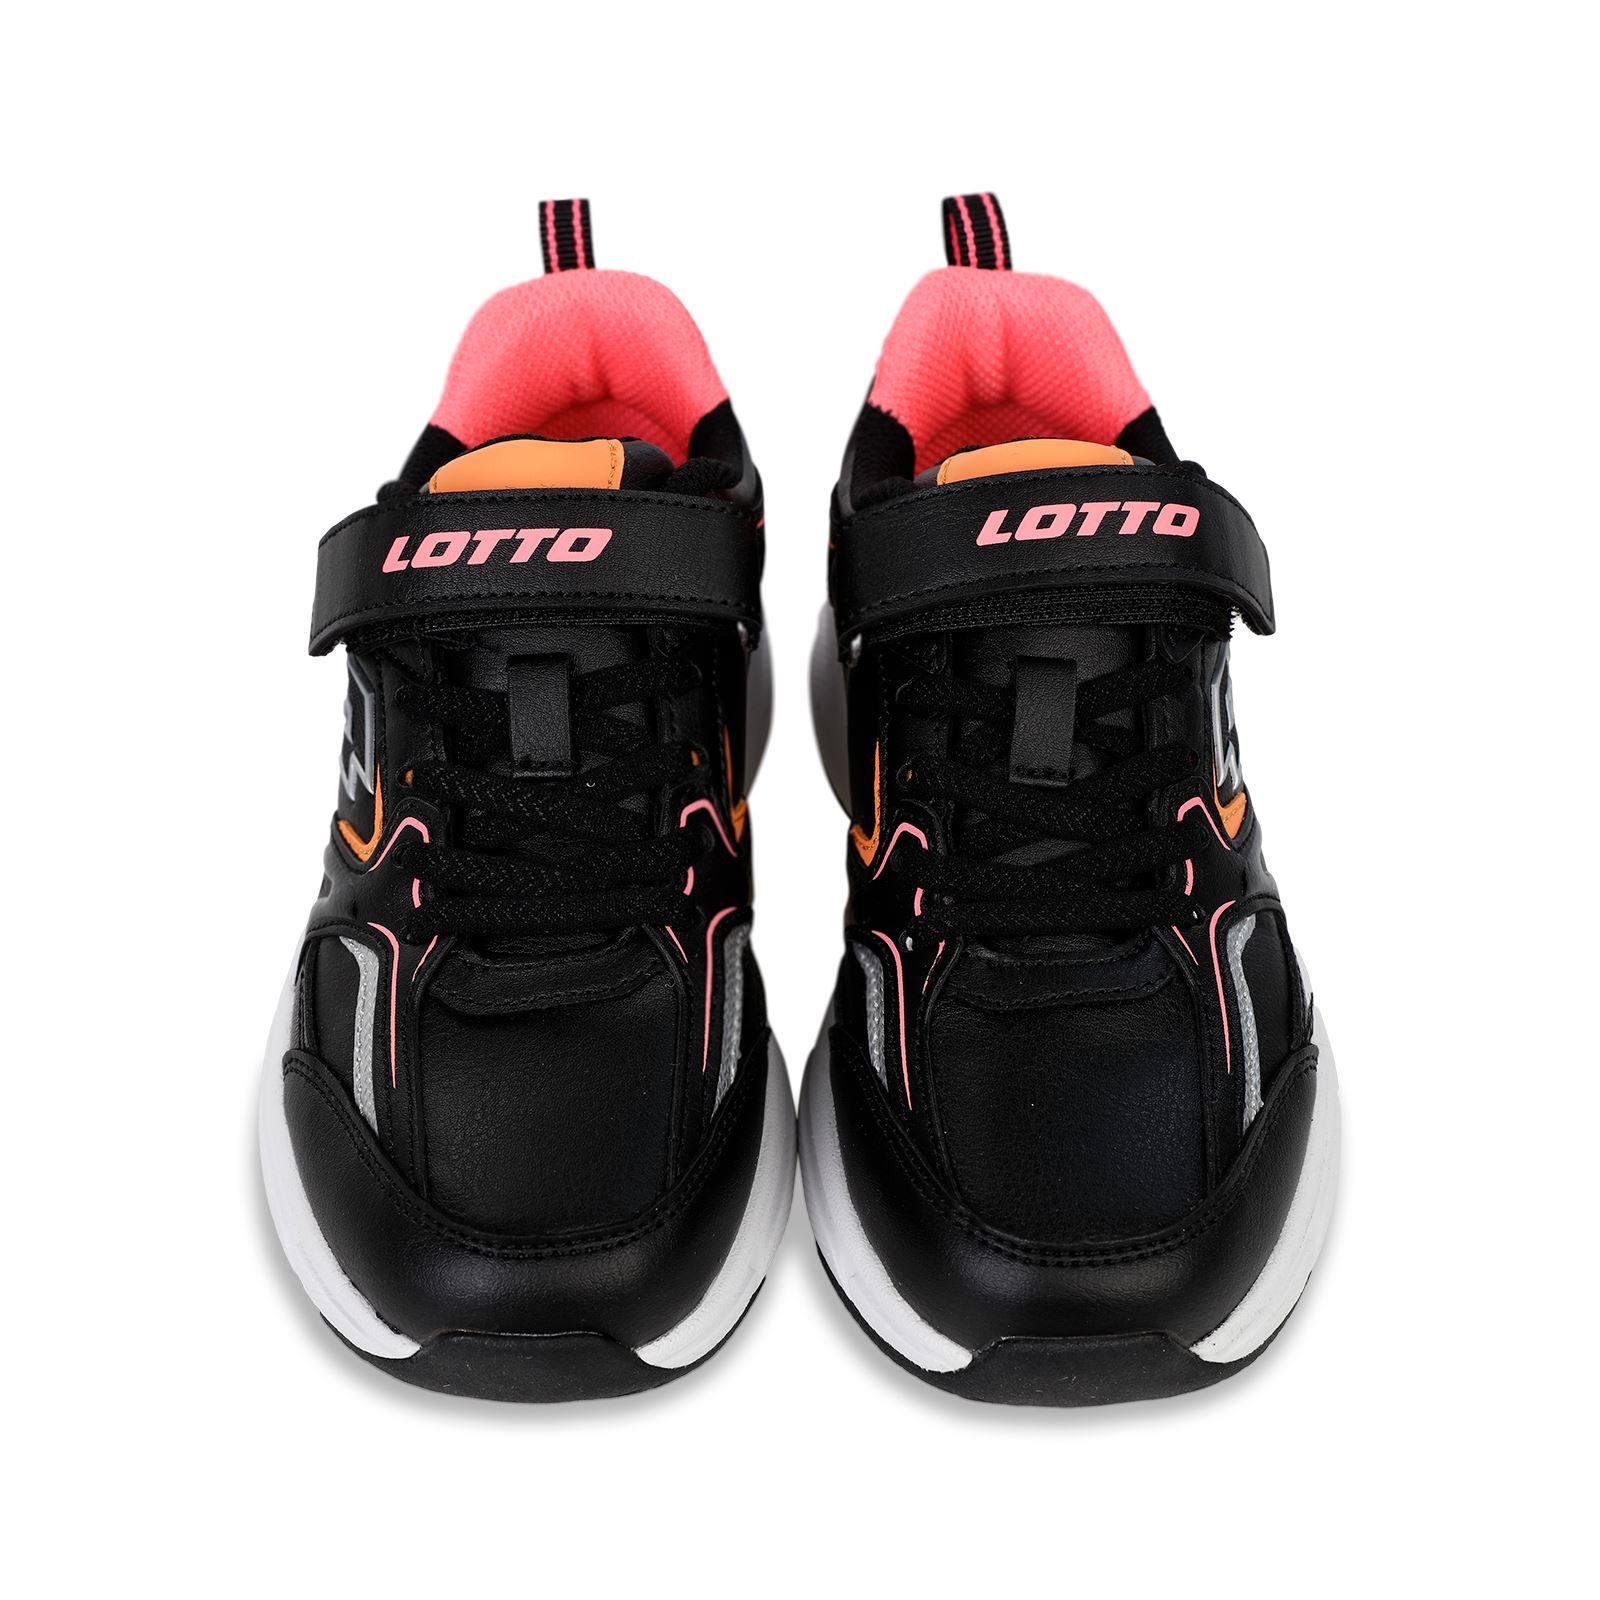 Lotto Life's Kız Çocuk Spor Ayakkabı 31-35 Numara Siyah